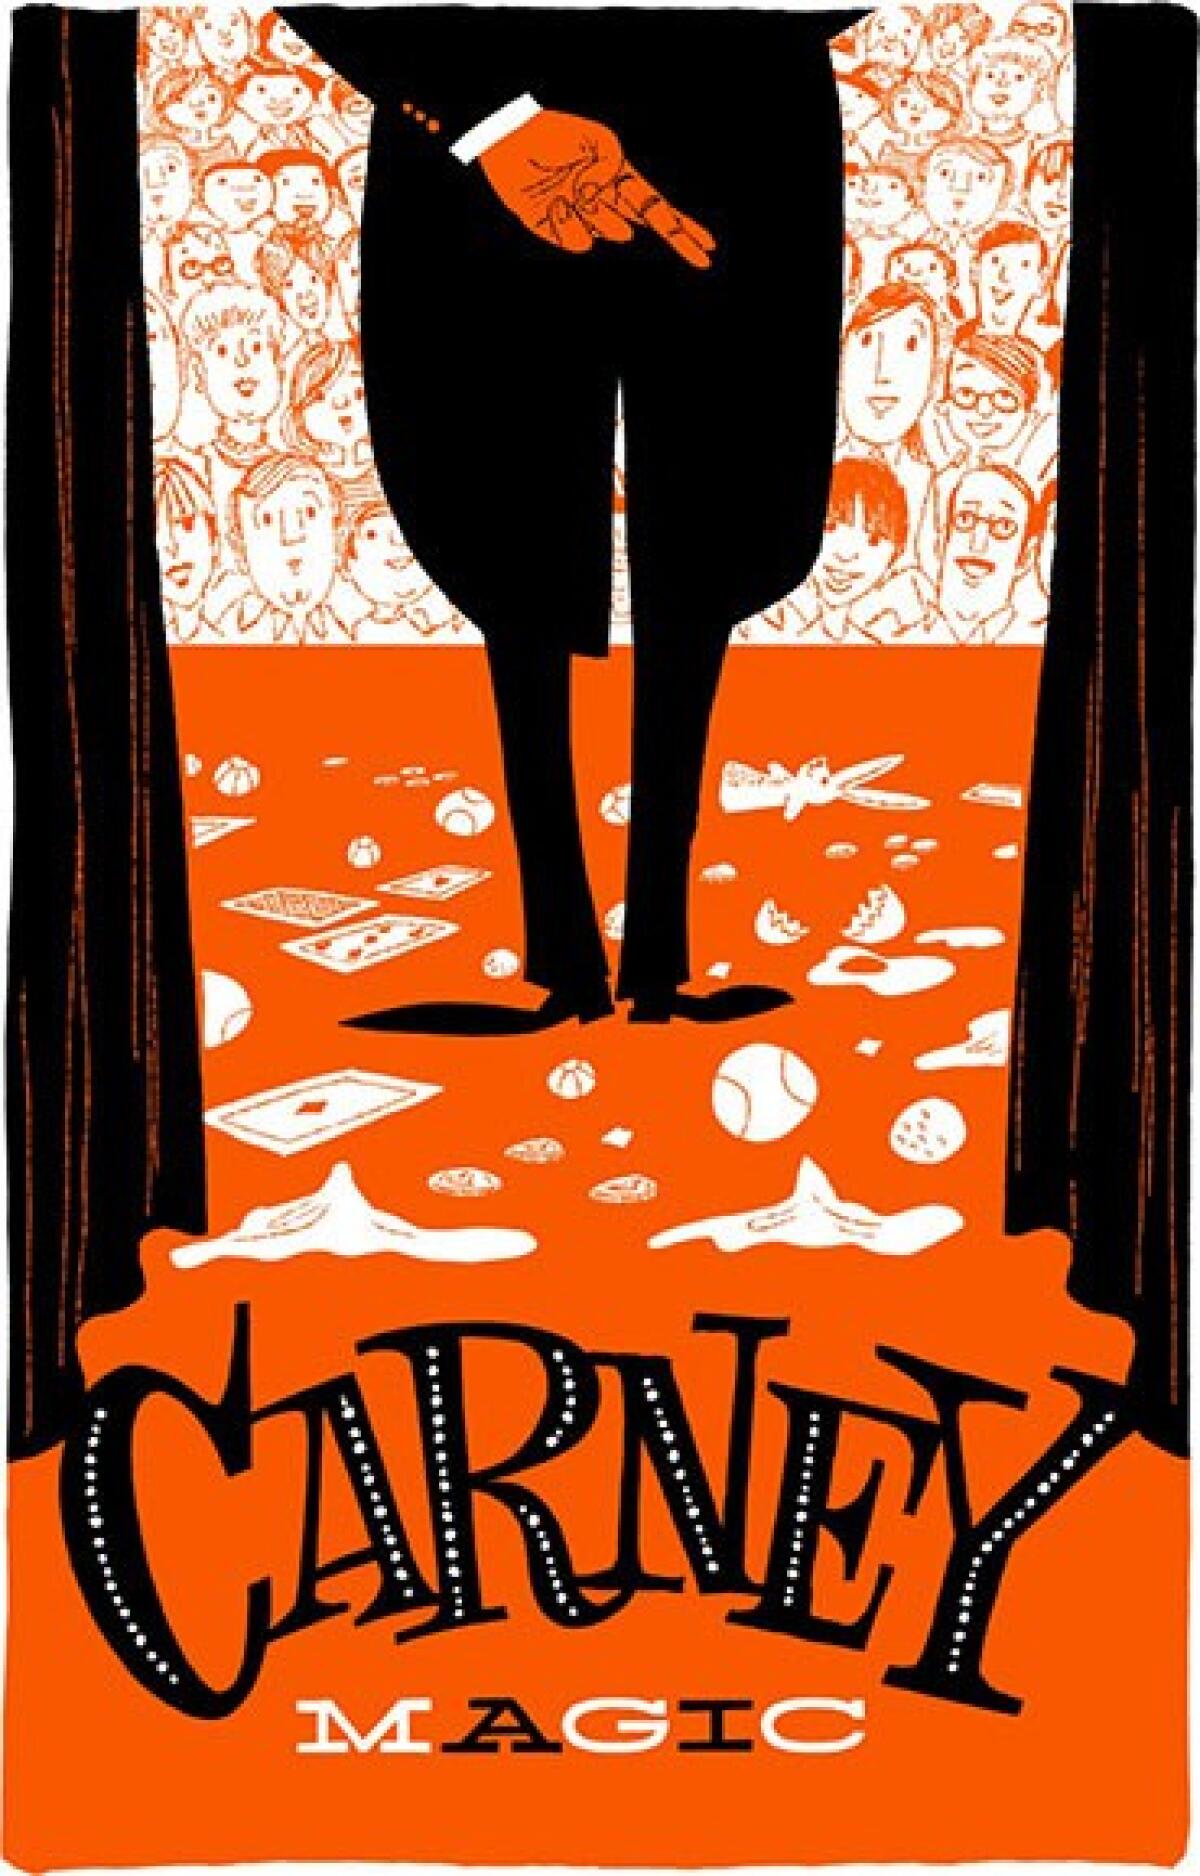 Carney Magic will run Aug. 8-9, starting at 7:30 p.m. at North Coast Repertory Theatre.